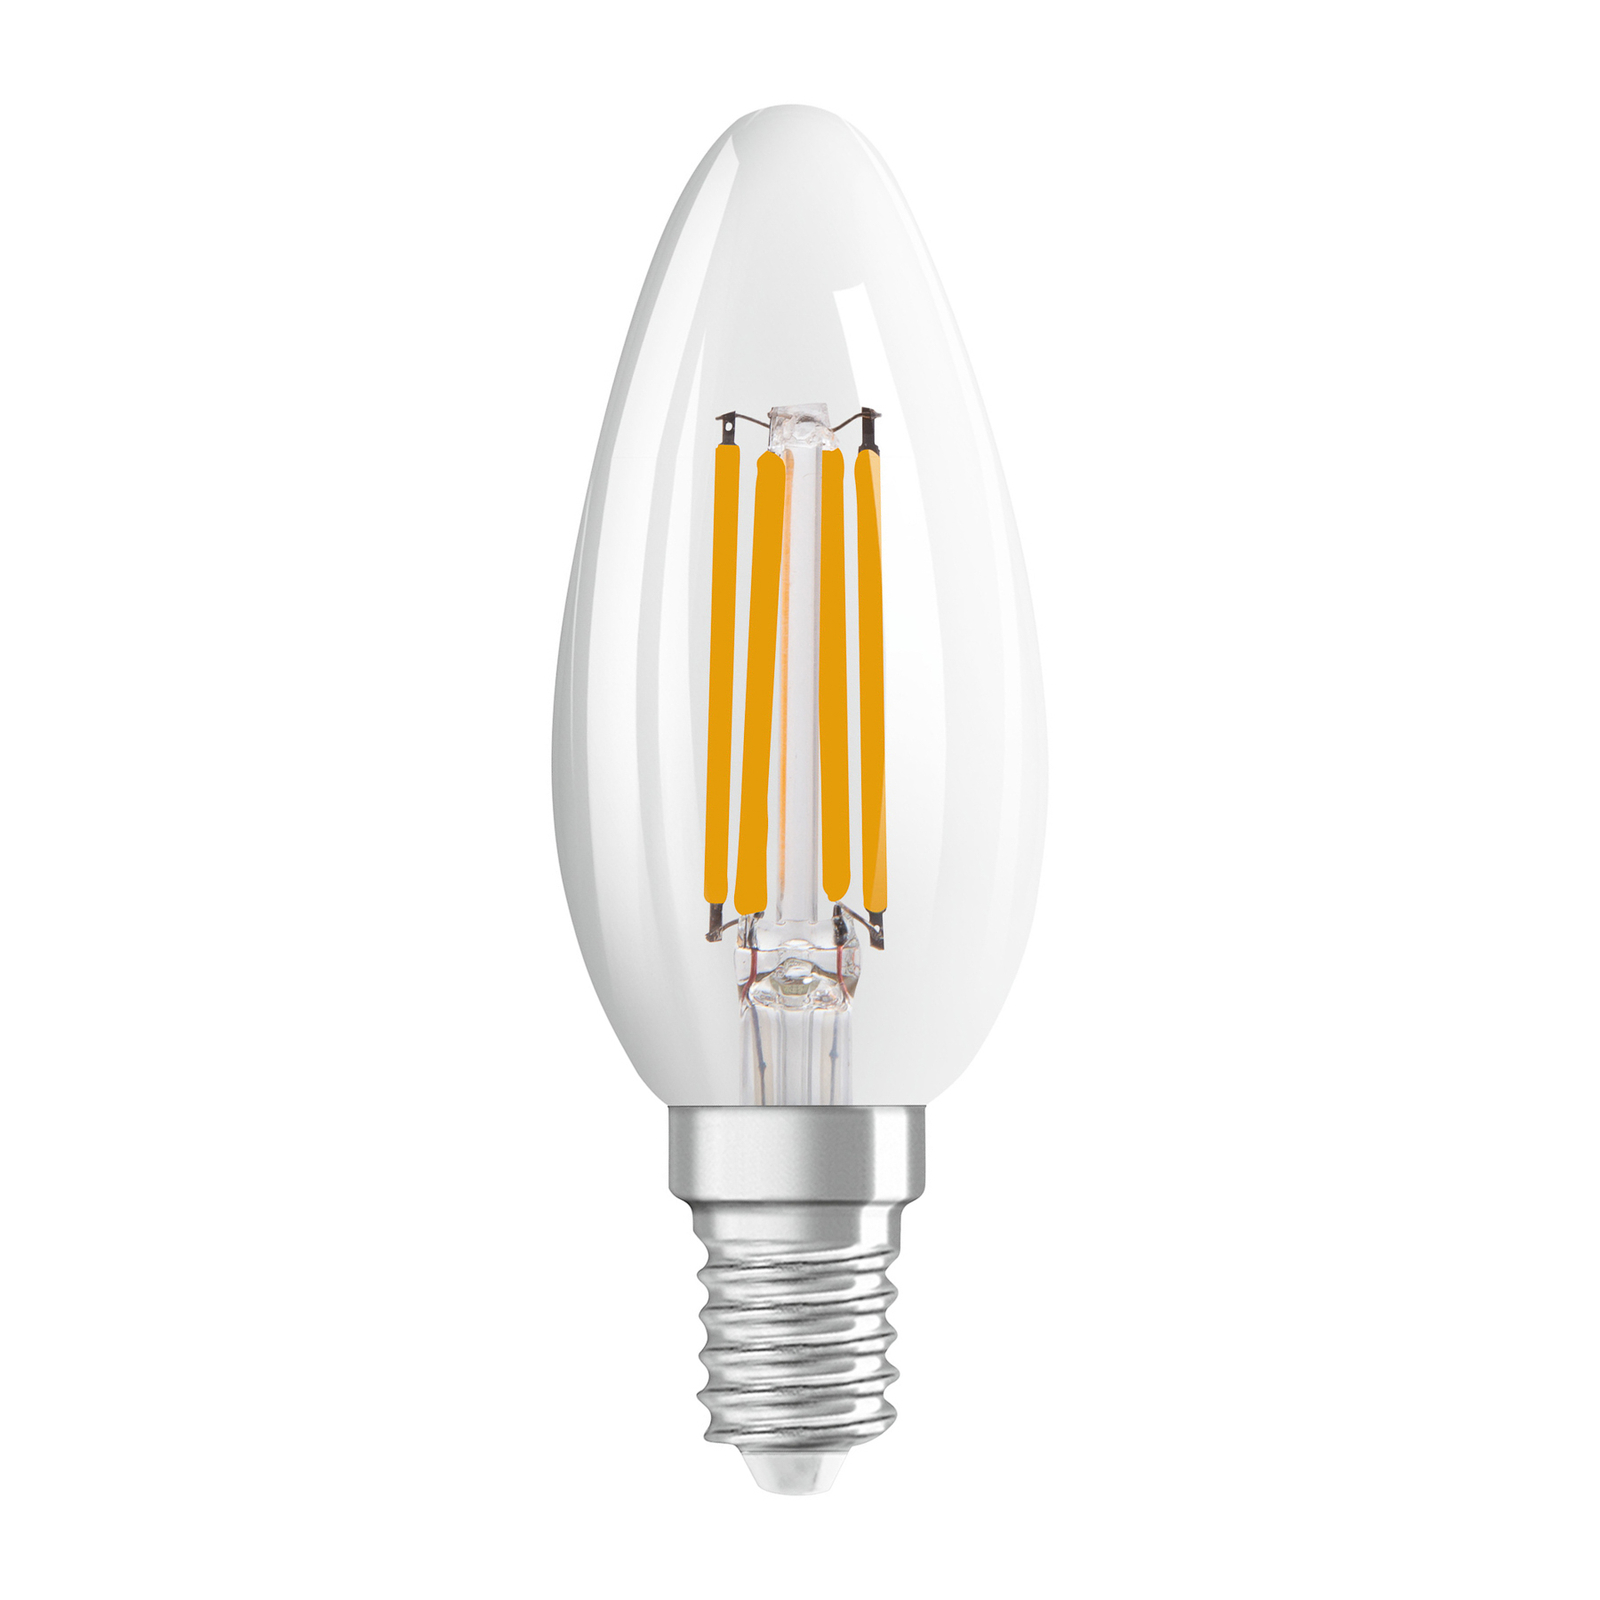 OSRAM LED-Lampe E14 4W GLOWdim klar